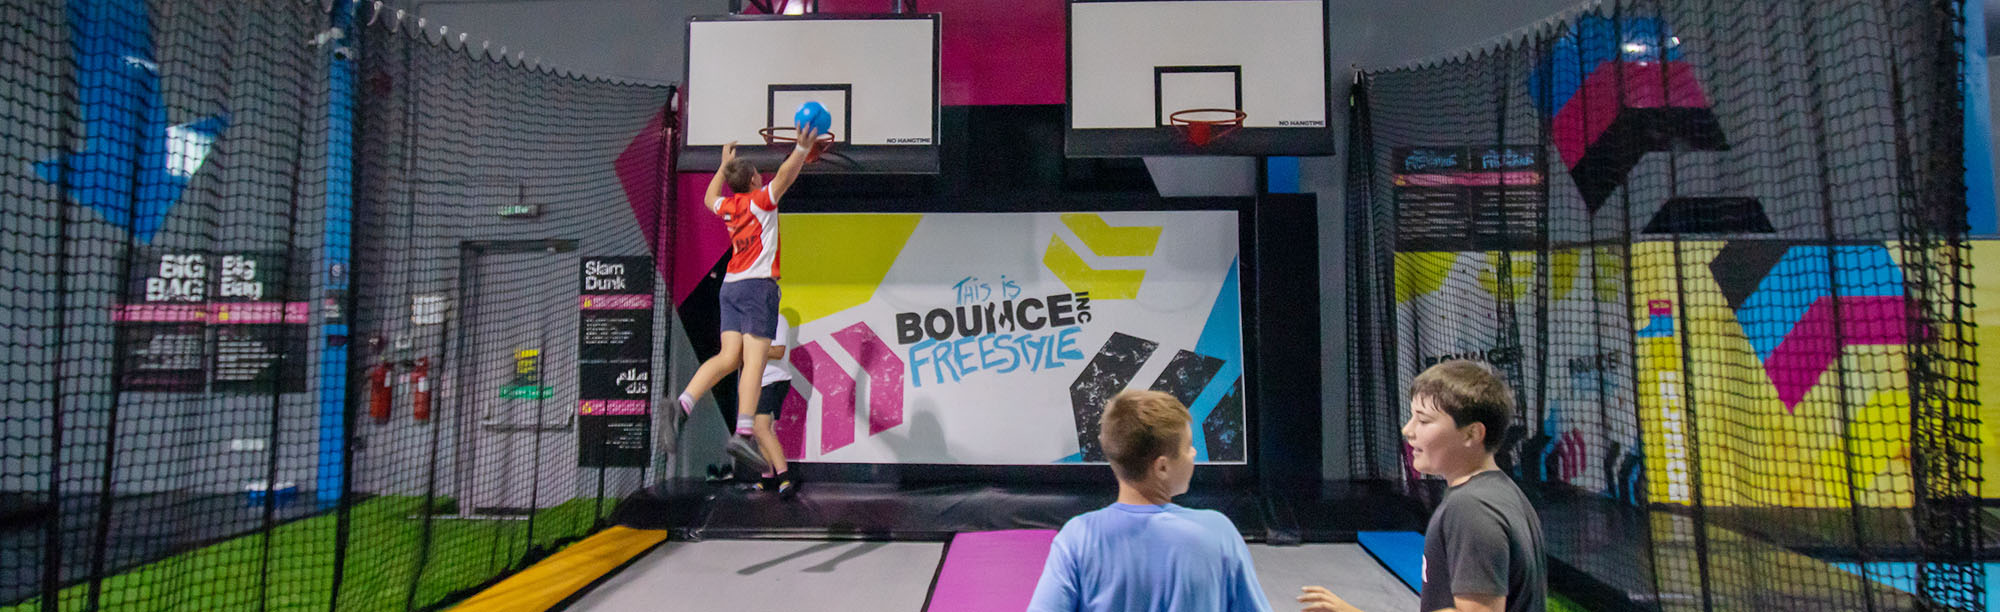 bounce-slam-dunk